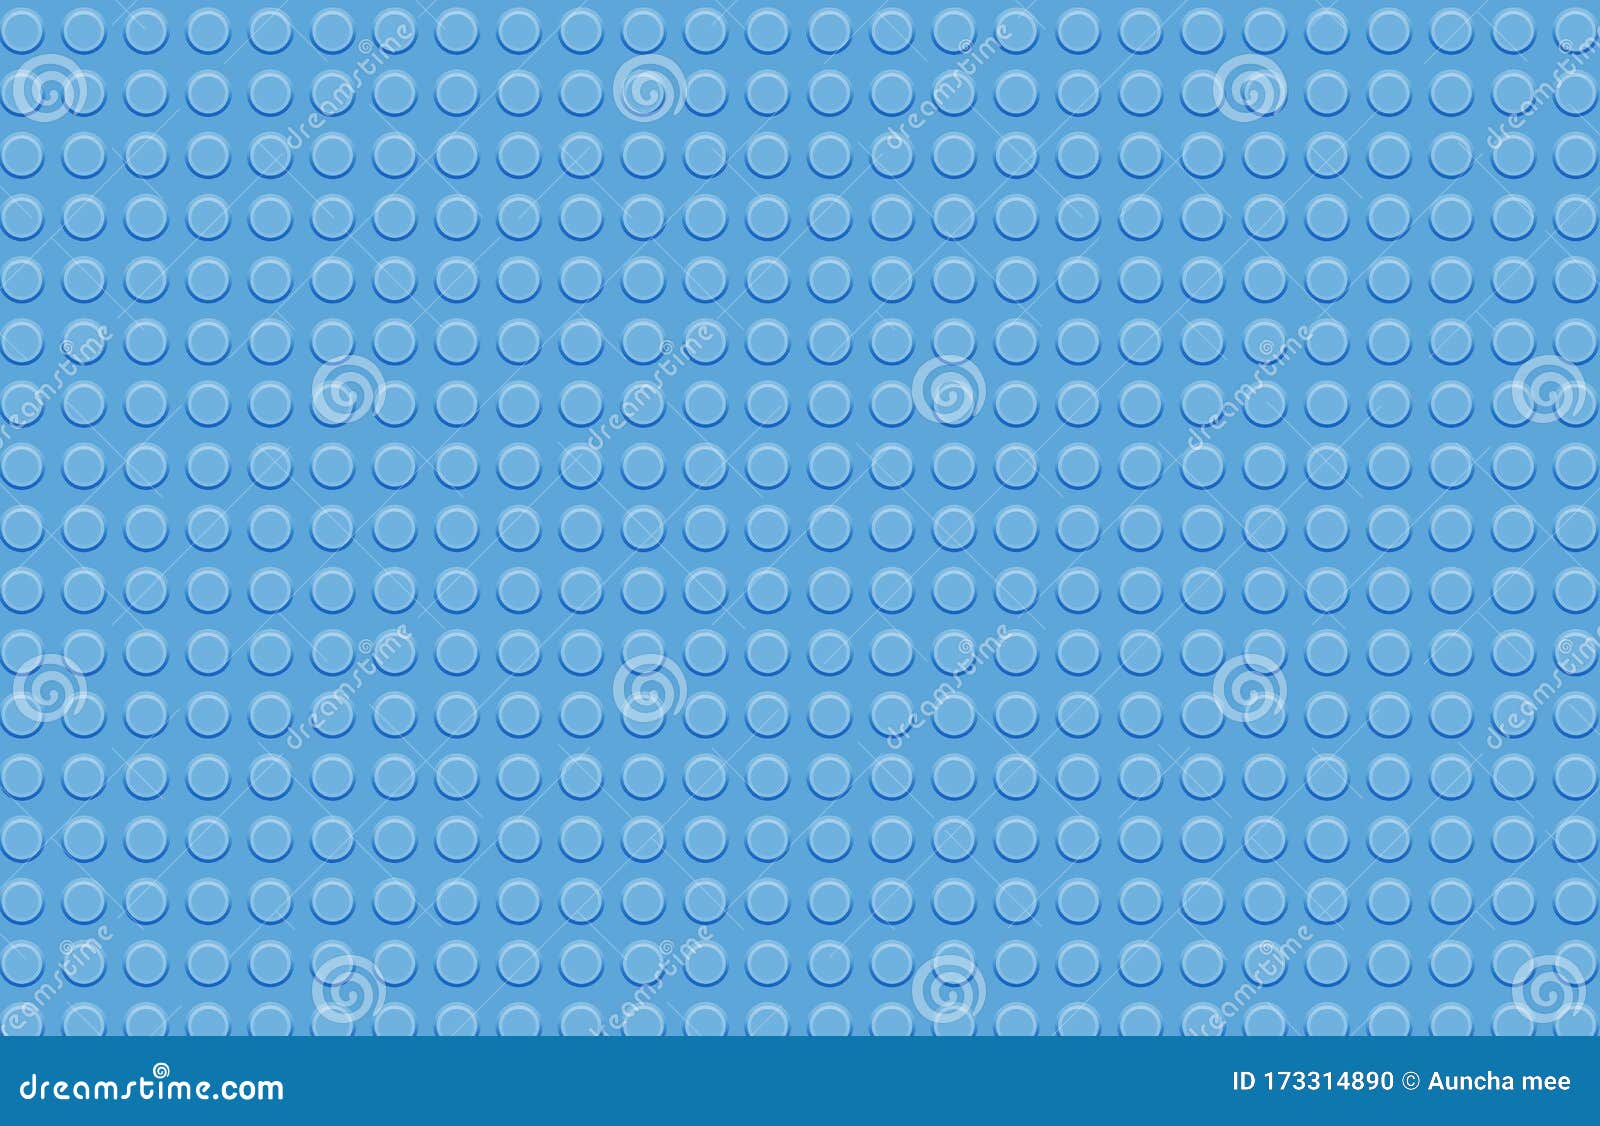 Blue lego background. stock photo. Image of print, seamless ...